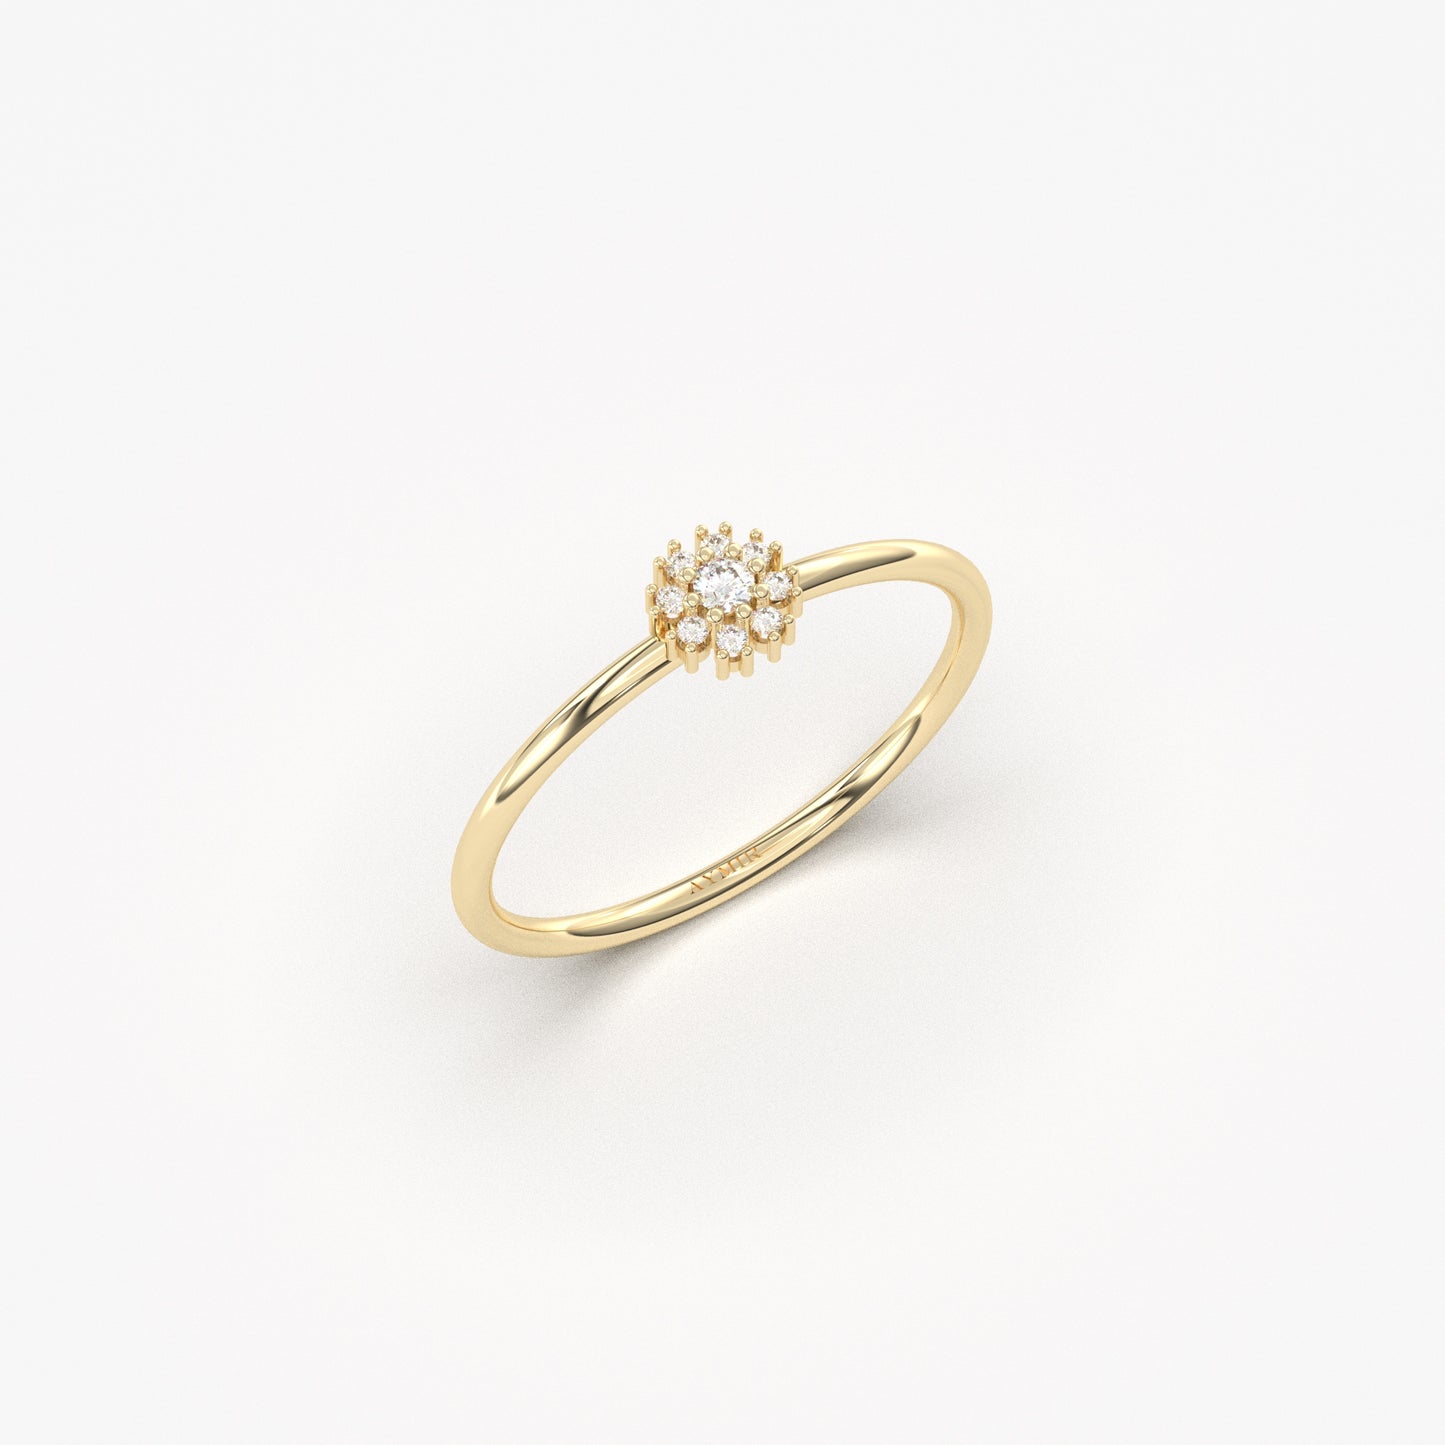 10K Gold Dainty Coronet Diamond Ring - 2S143